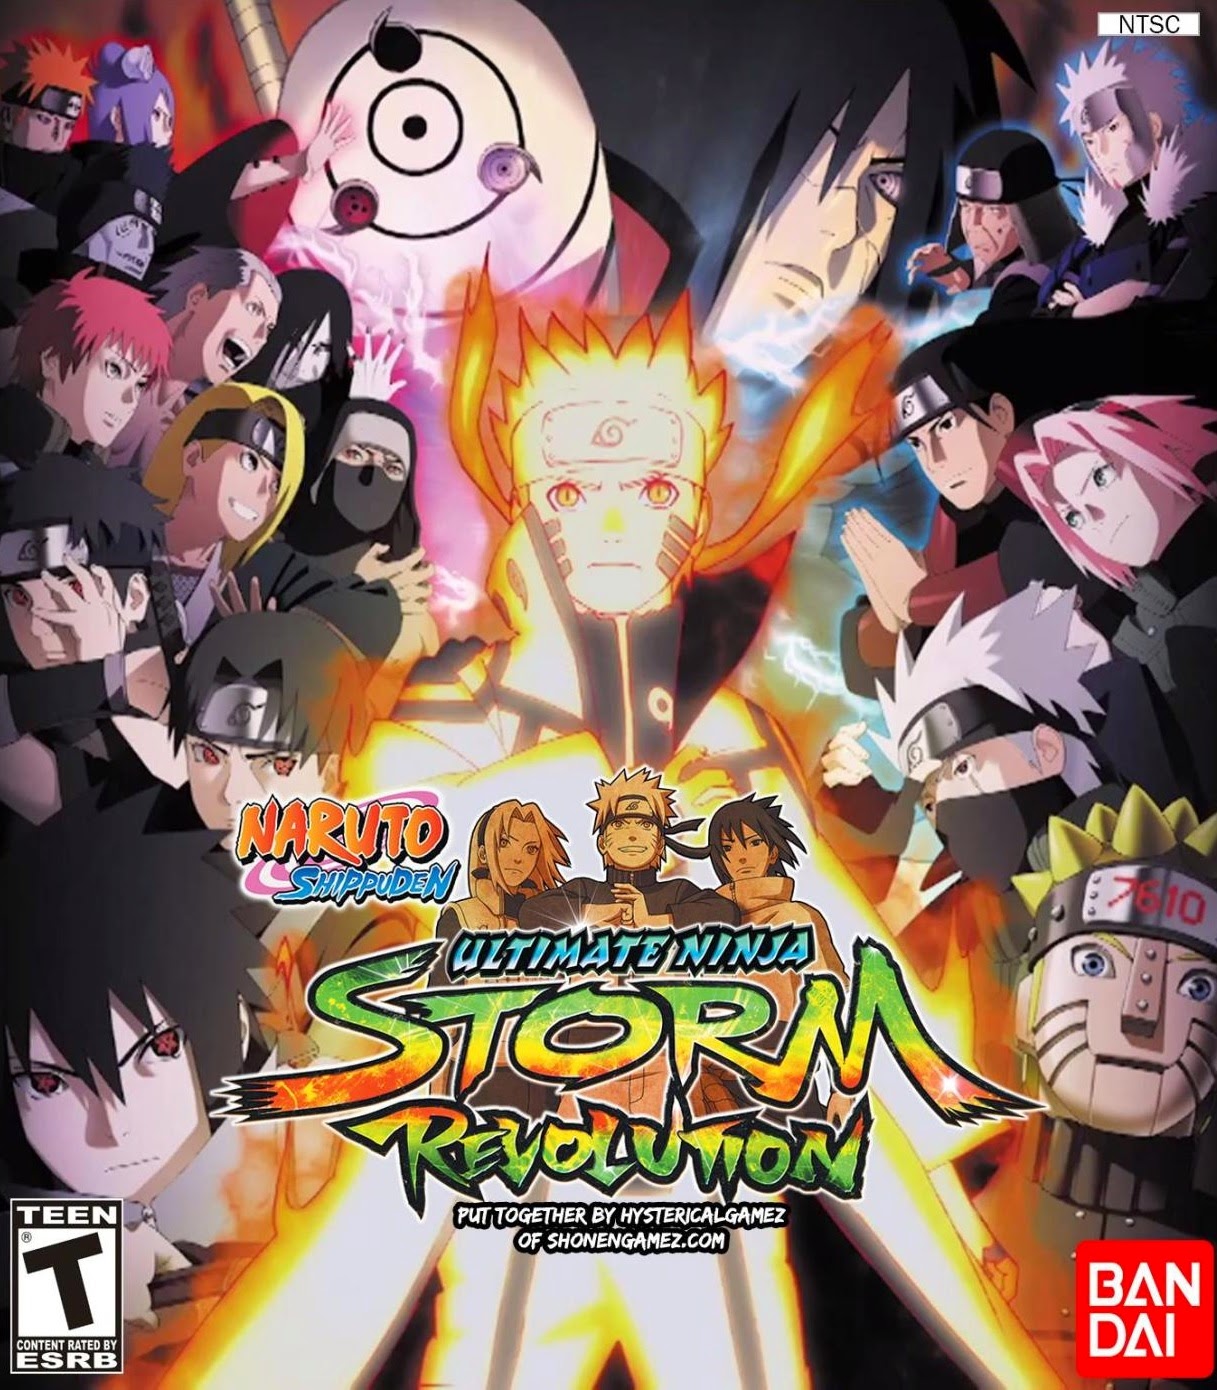 download game naruto shippuden ultimate ninja storm 1 pc